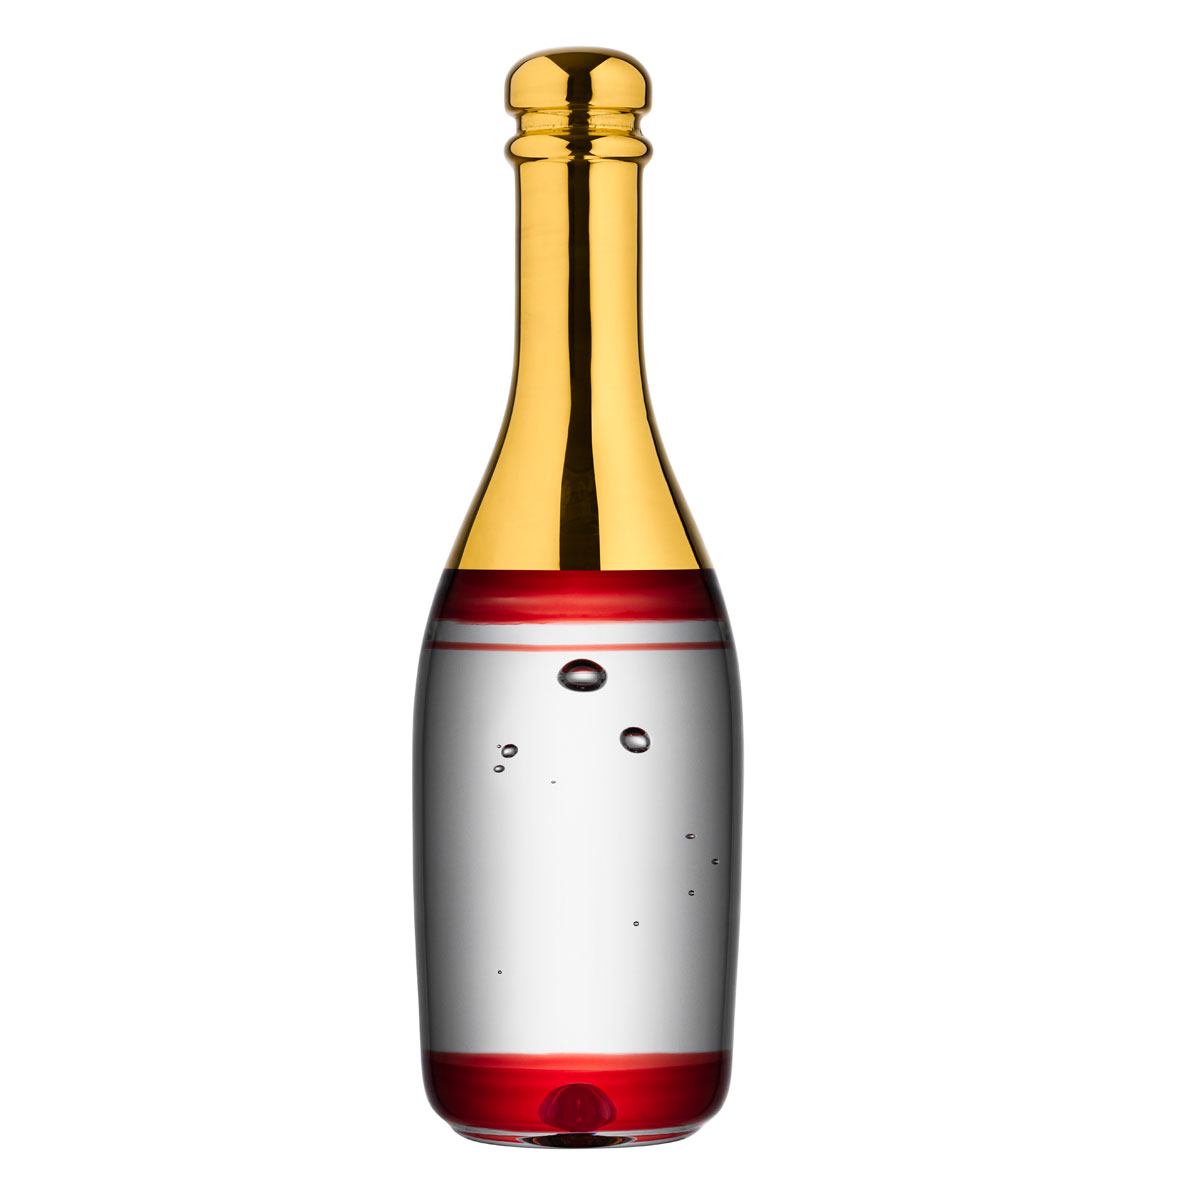 Kosta Boda Celebrate Crystal Champagne Bottle, Red